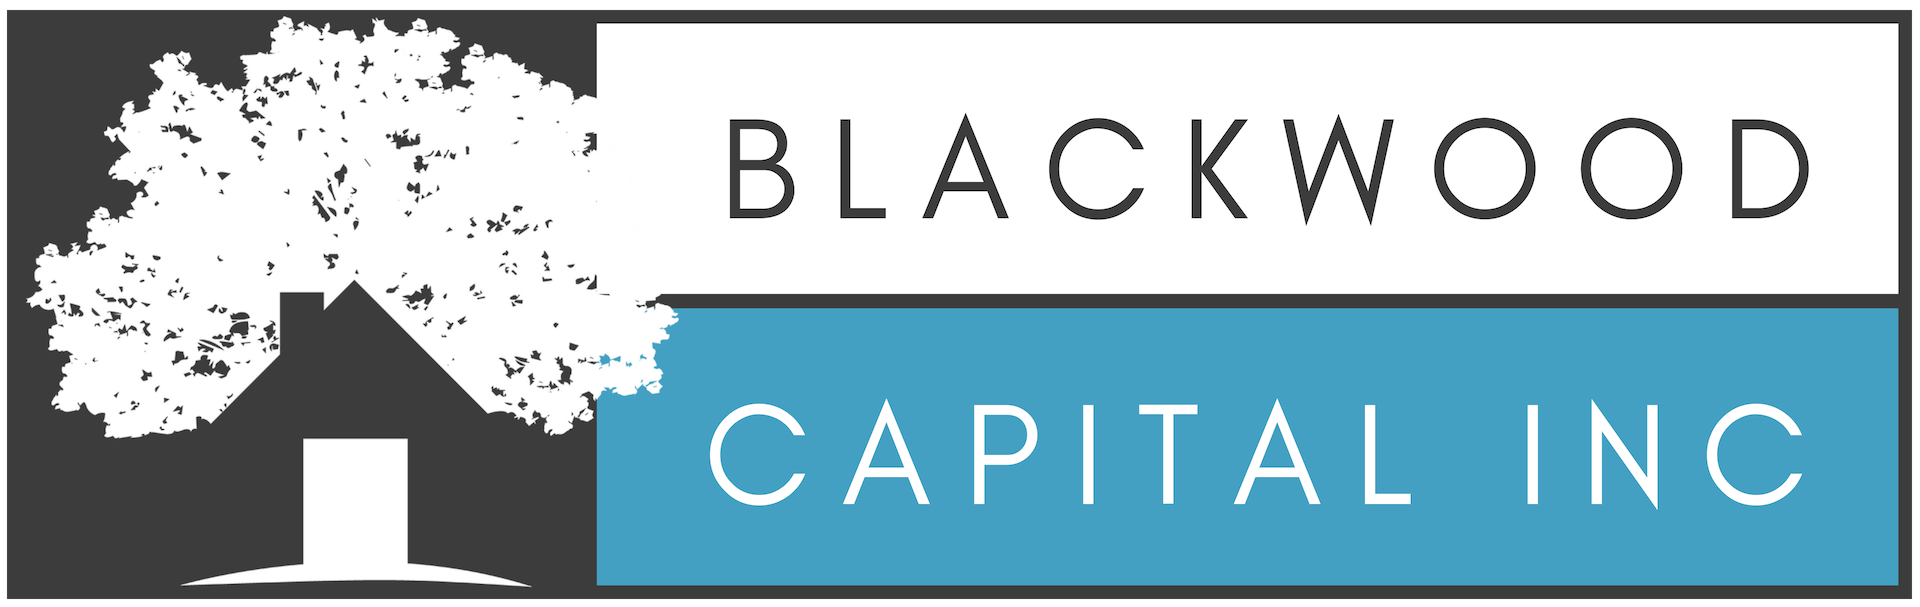 Blackwood Capital logo